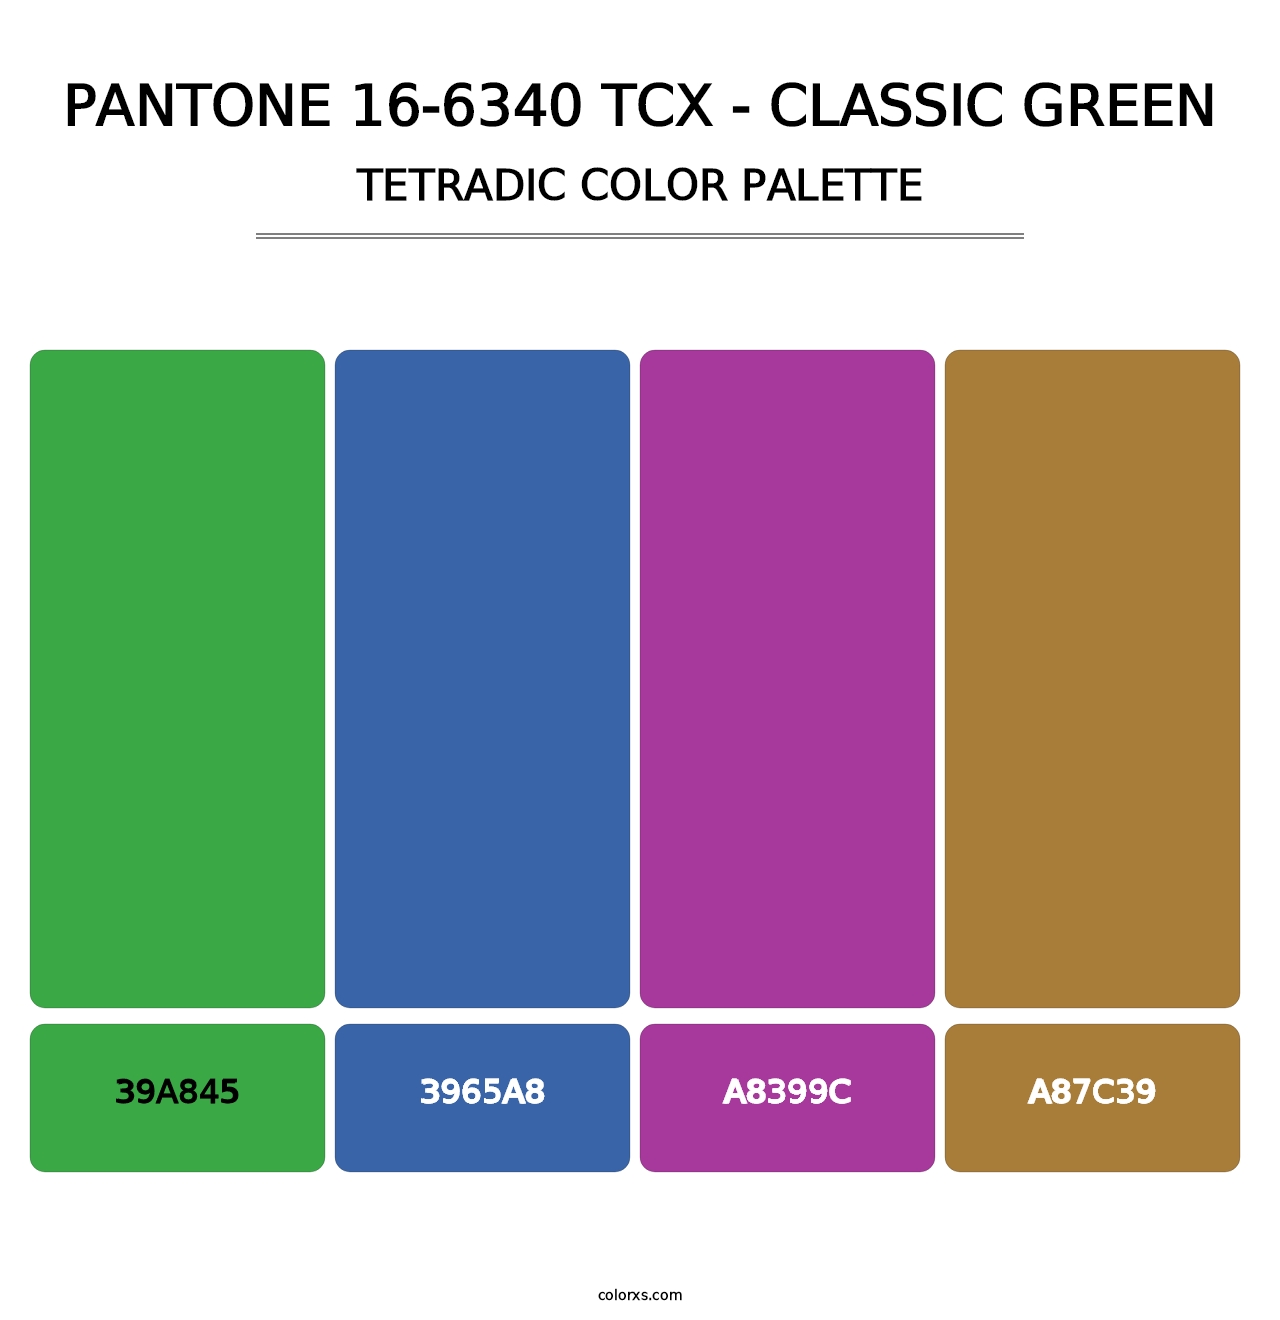 PANTONE 16-6340 TCX - Classic Green - Tetradic Color Palette